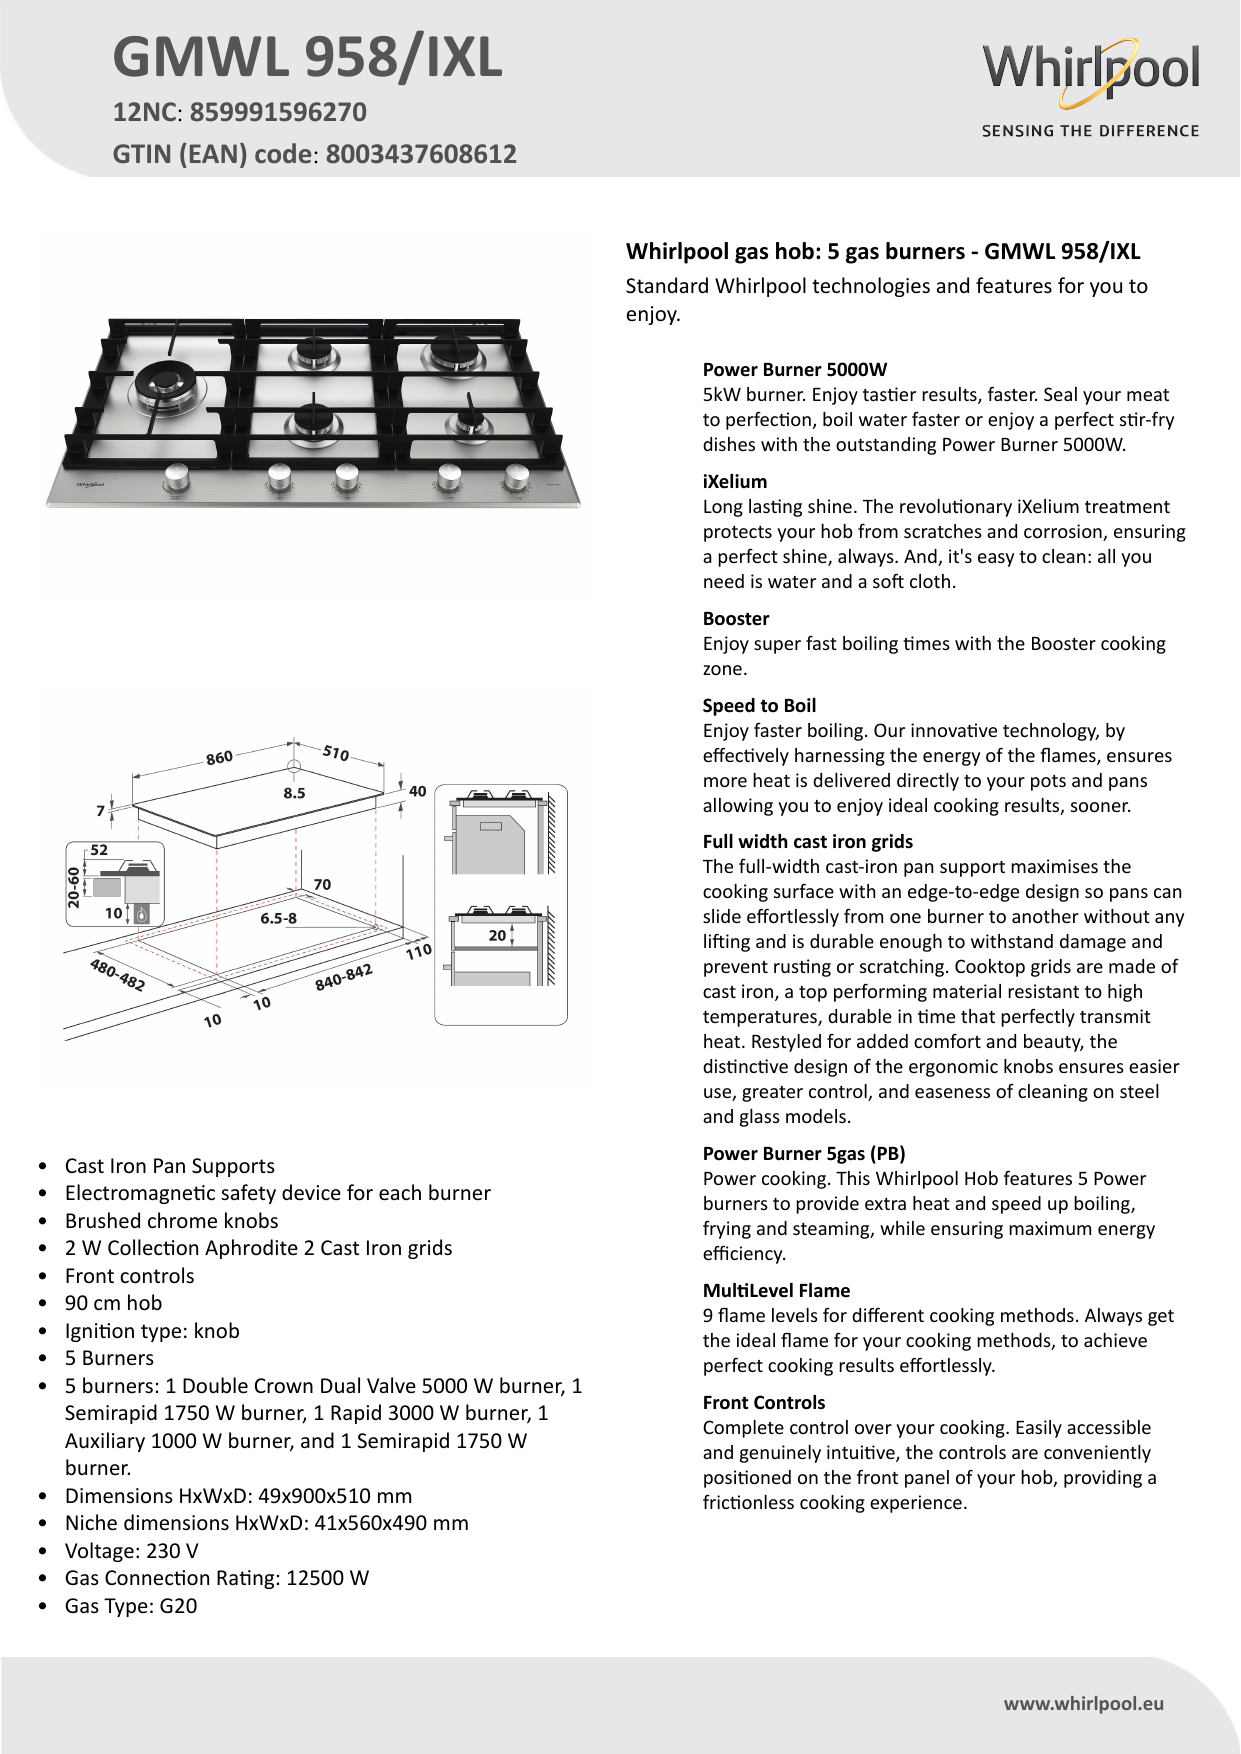 Whirlpool GMWL 958/IXL Hob Product Data Sheet